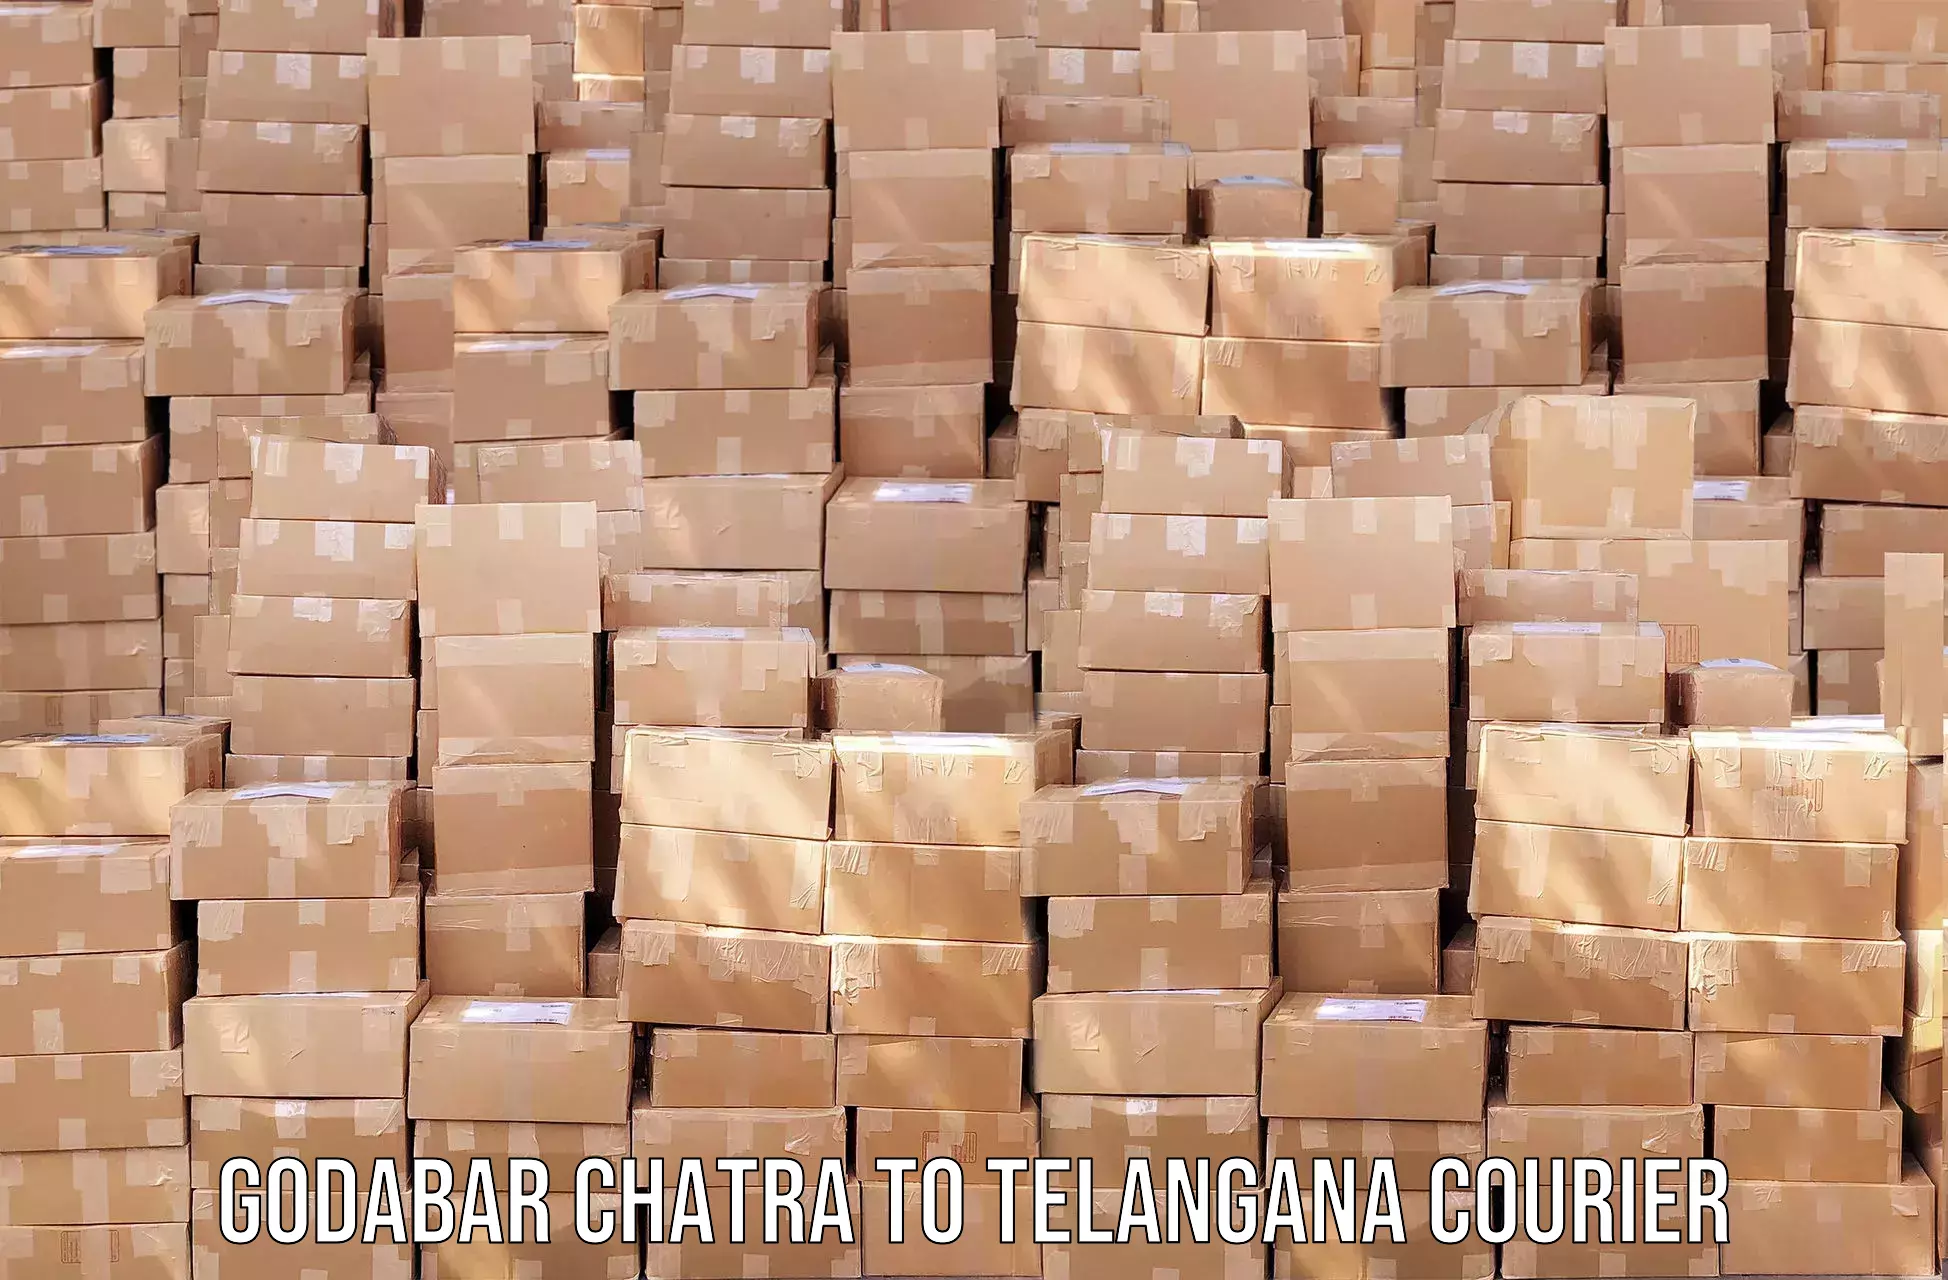 Courier service partnerships Godabar Chatra to Rudrangi